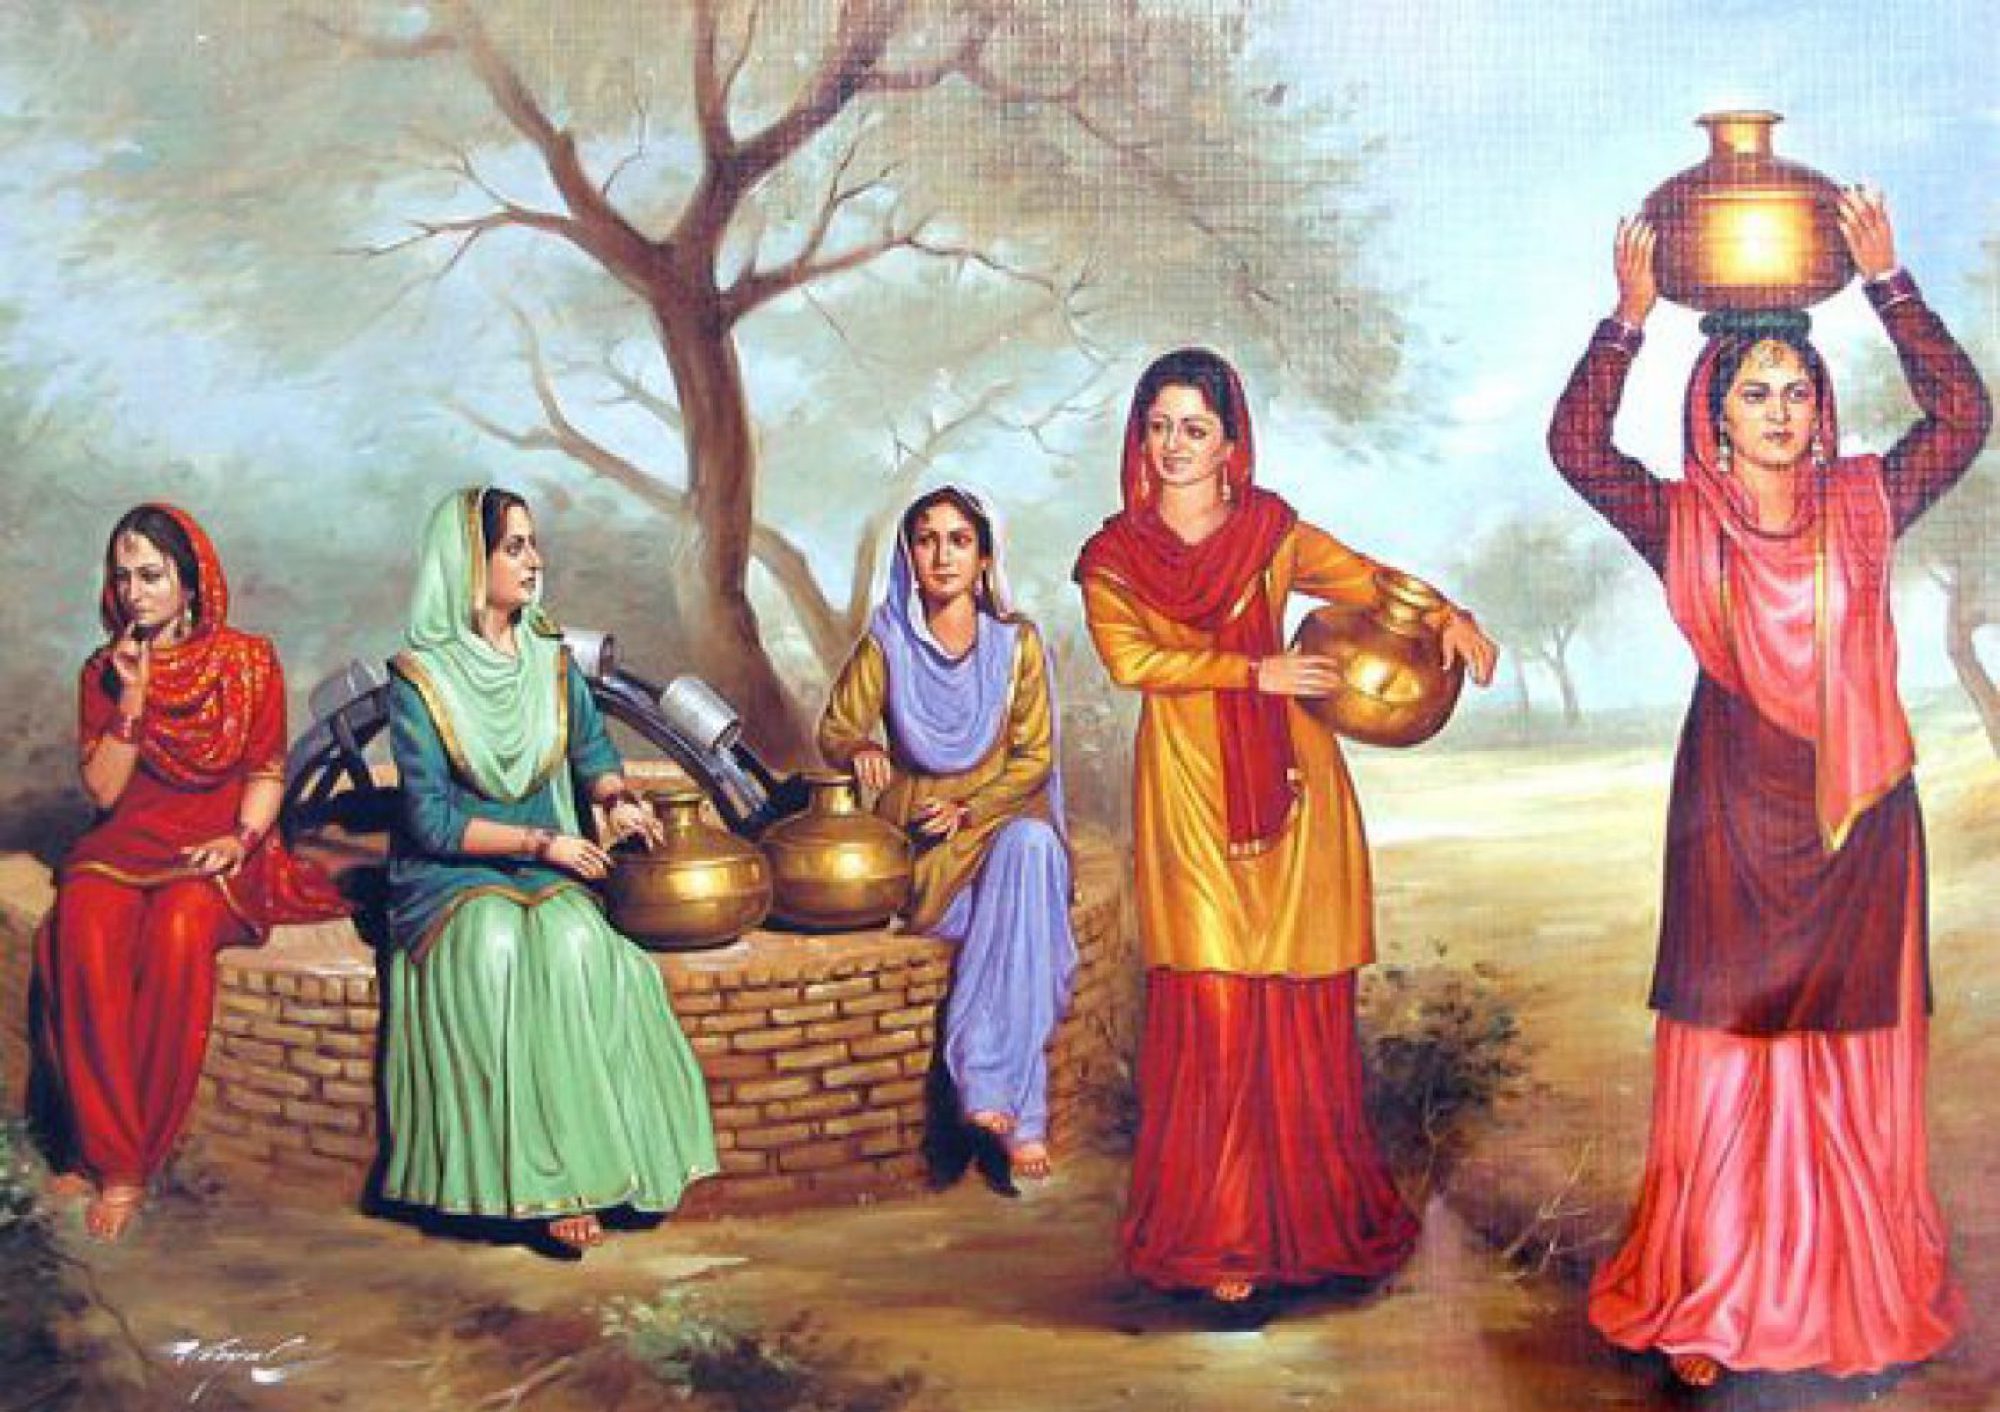 Indian Women Culture